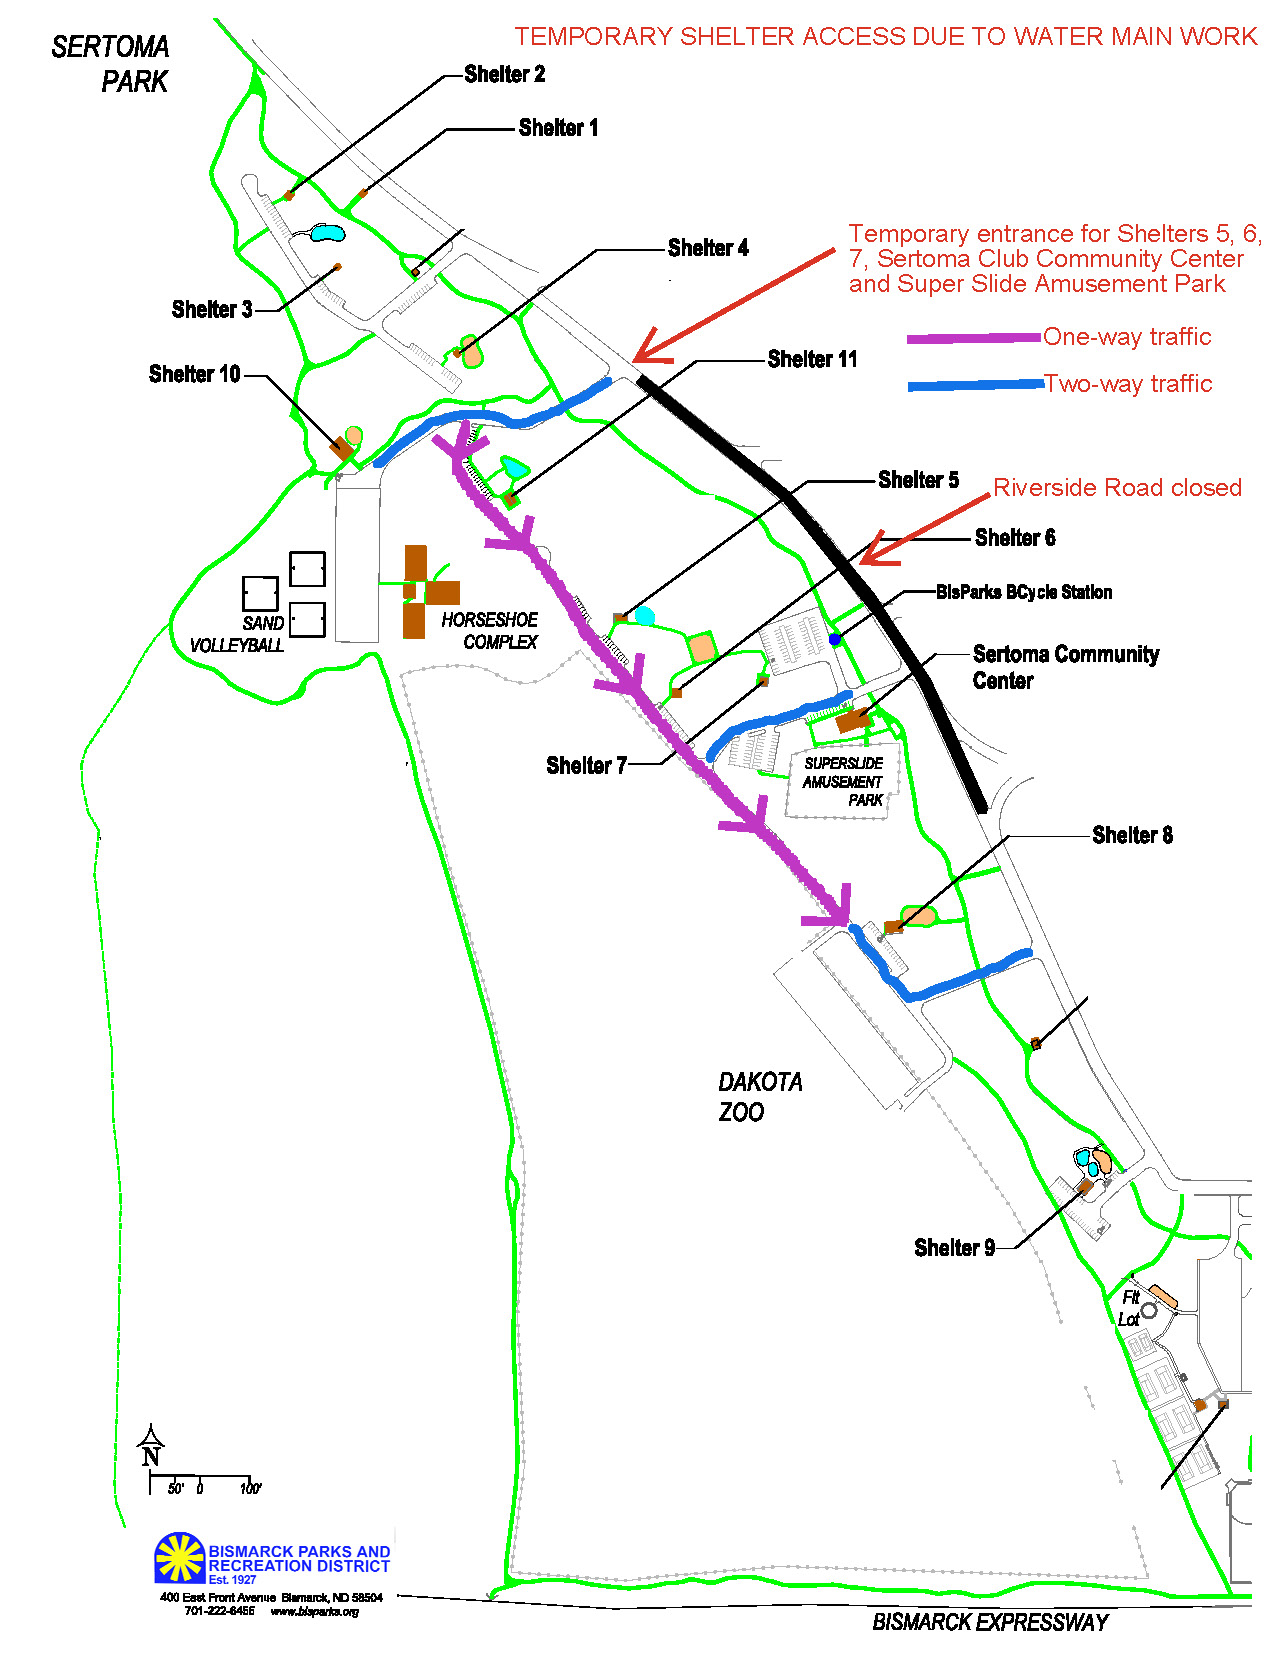 Sertoma Park temporary access route